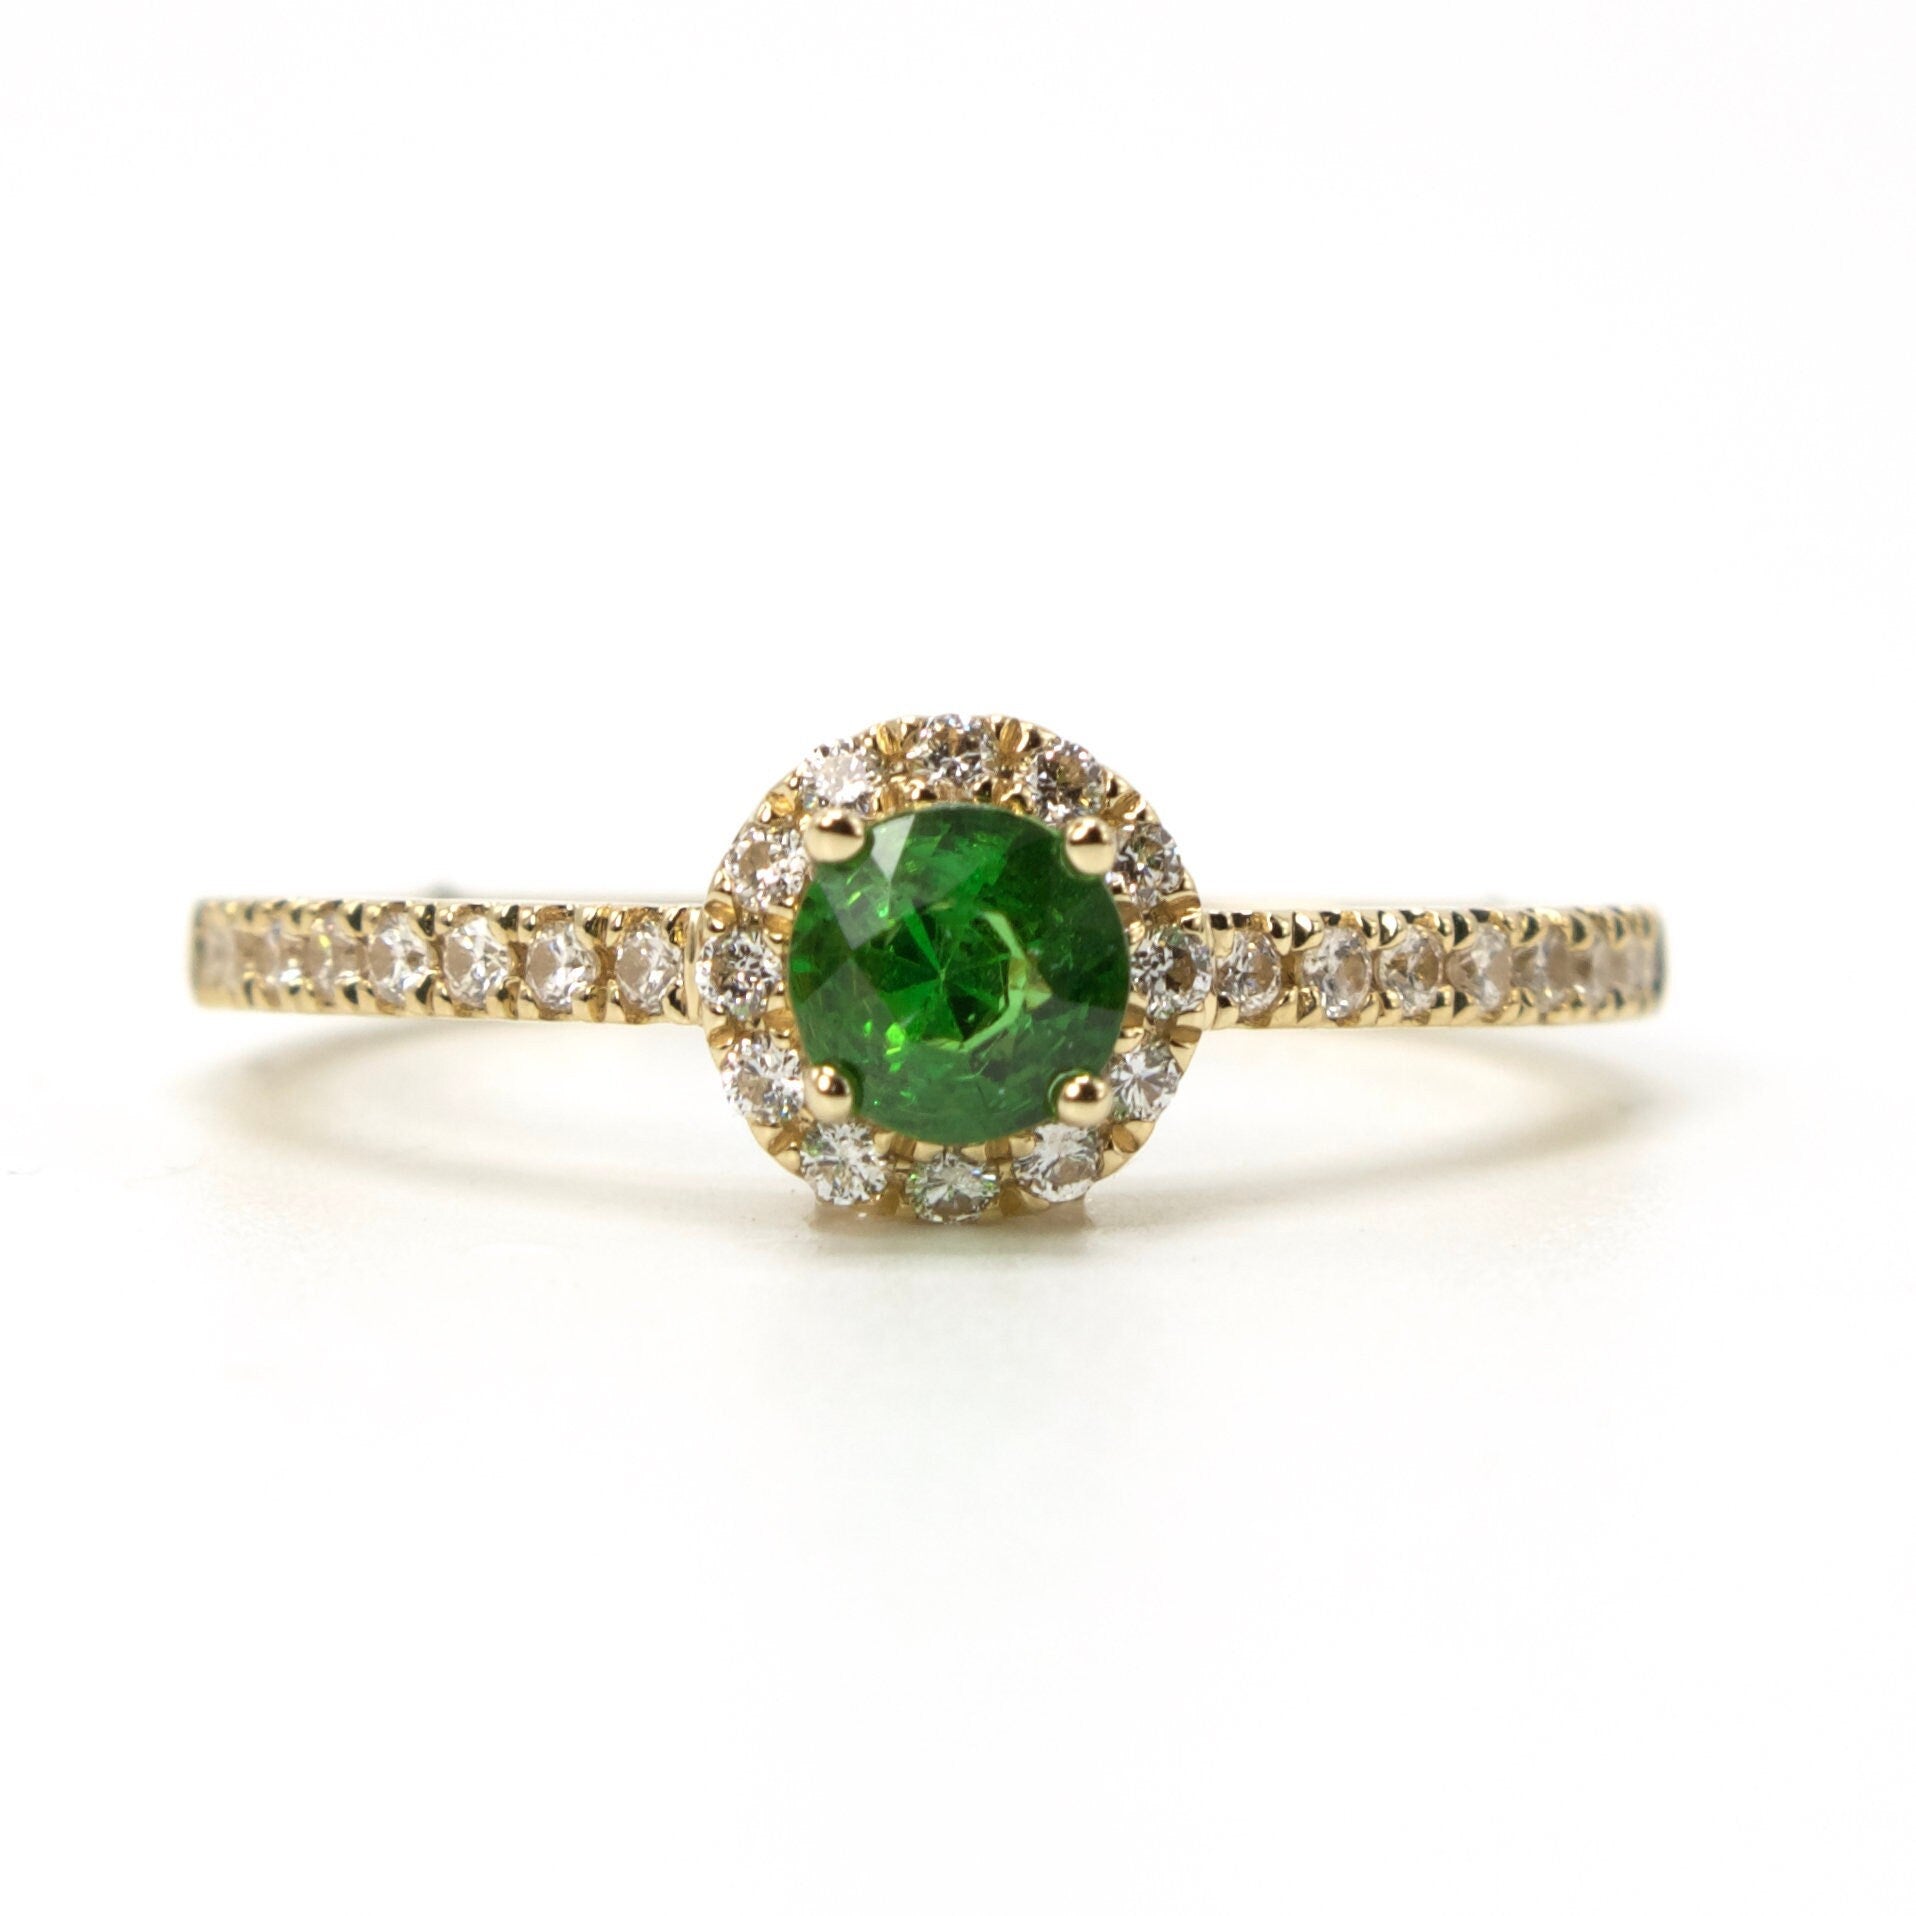 Round Green Tsavorite Garnet Engagement Ring with Diamond Halo in 14K Yellow Gold